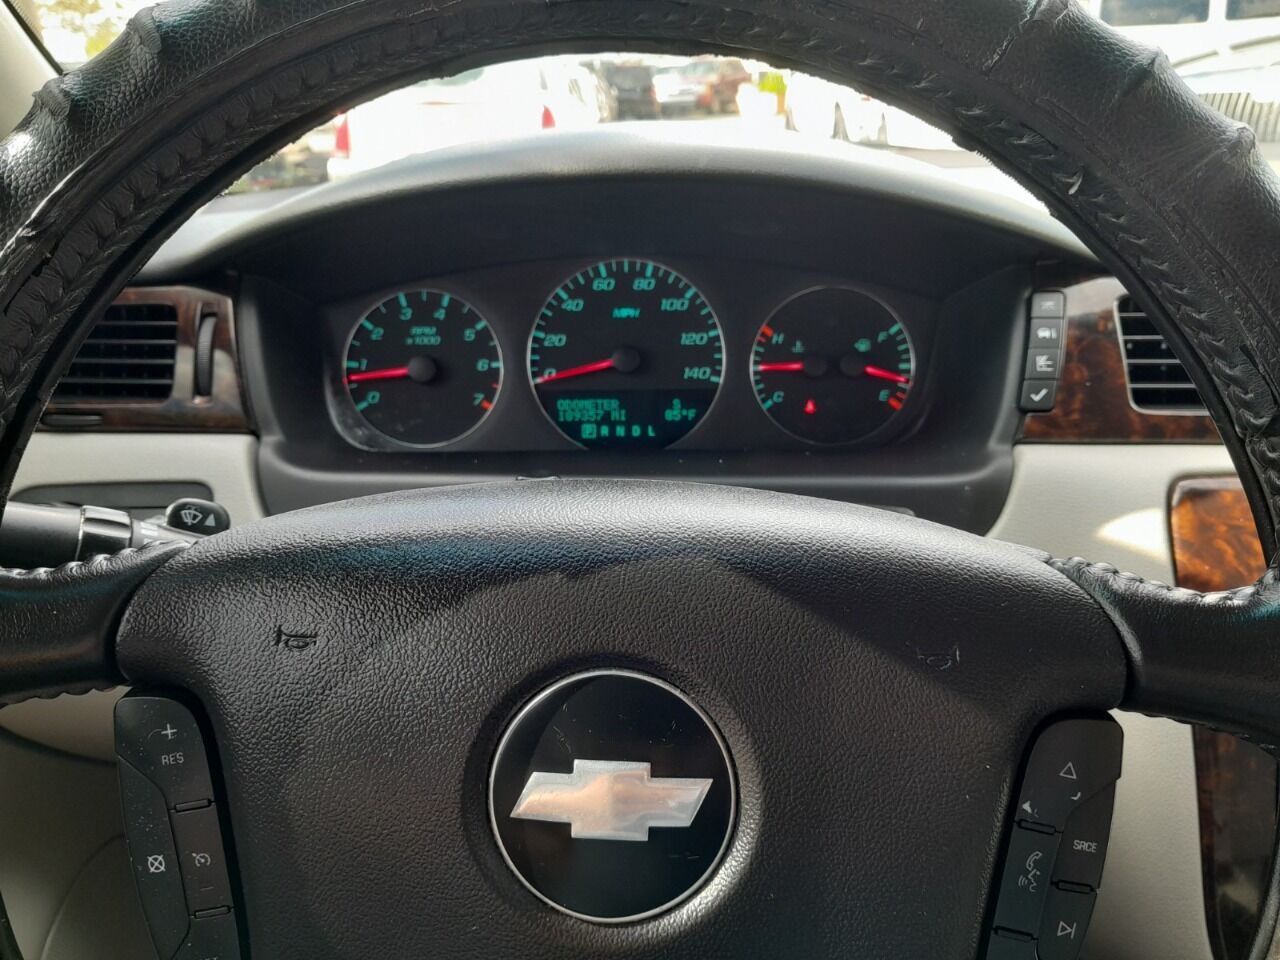 2013 Chevrolet Impala Sedan - $4,950